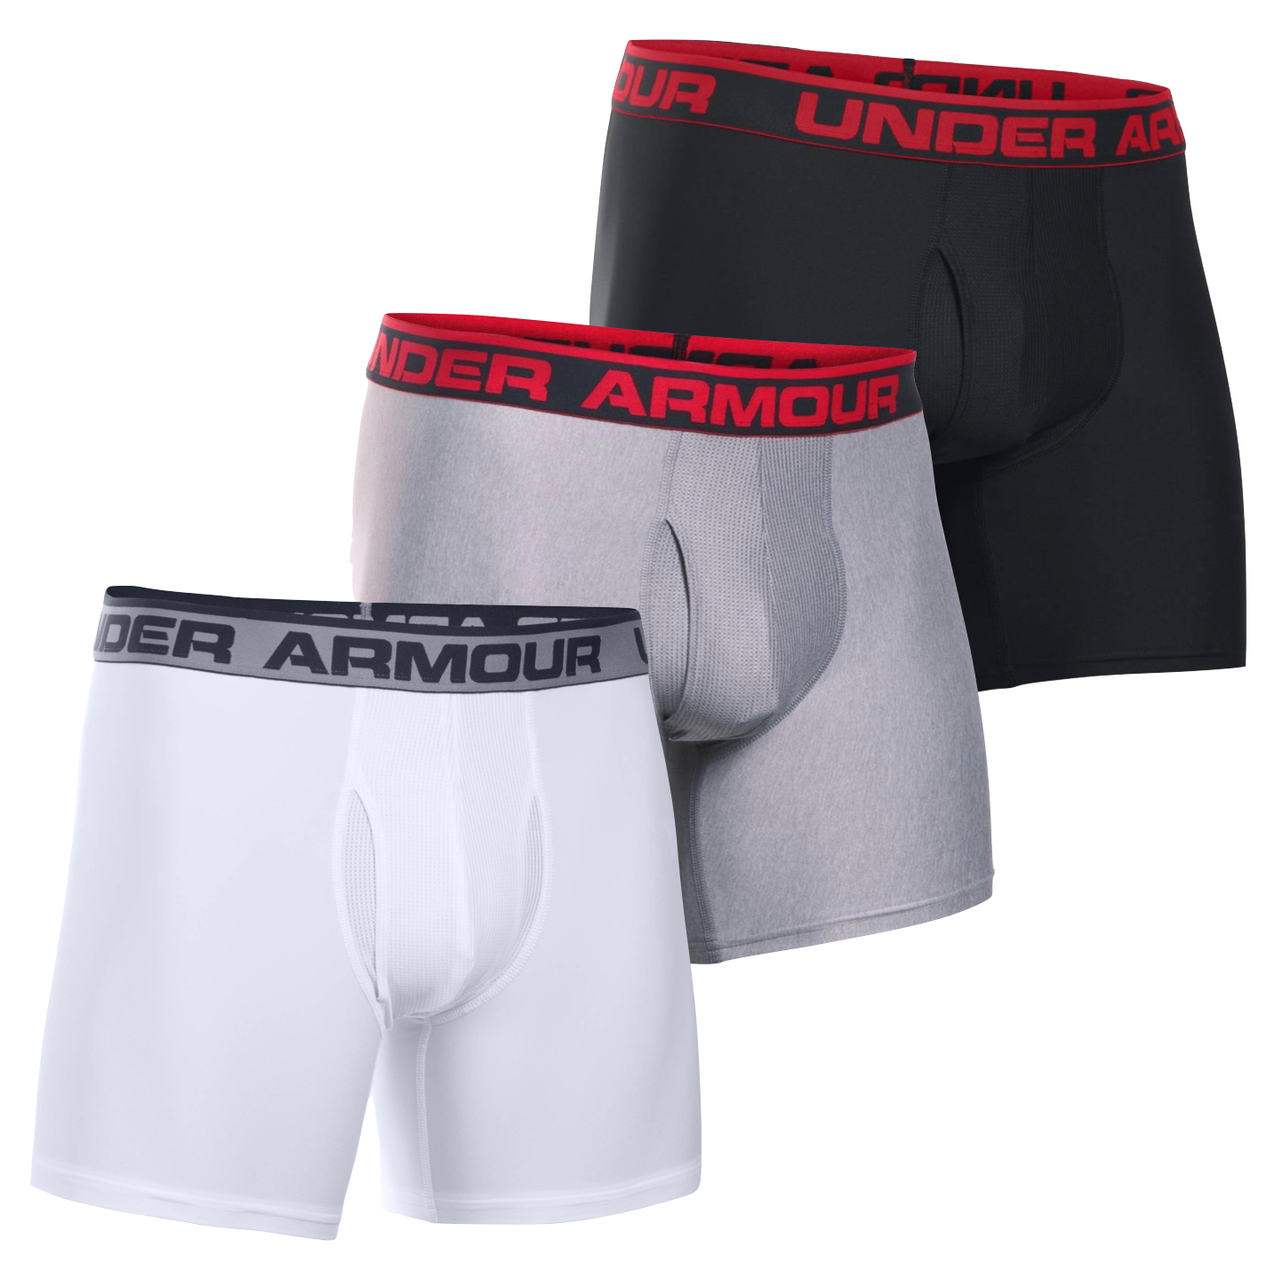 Under Armour Men's UA Original Series 6 Boxerjock Underwear S